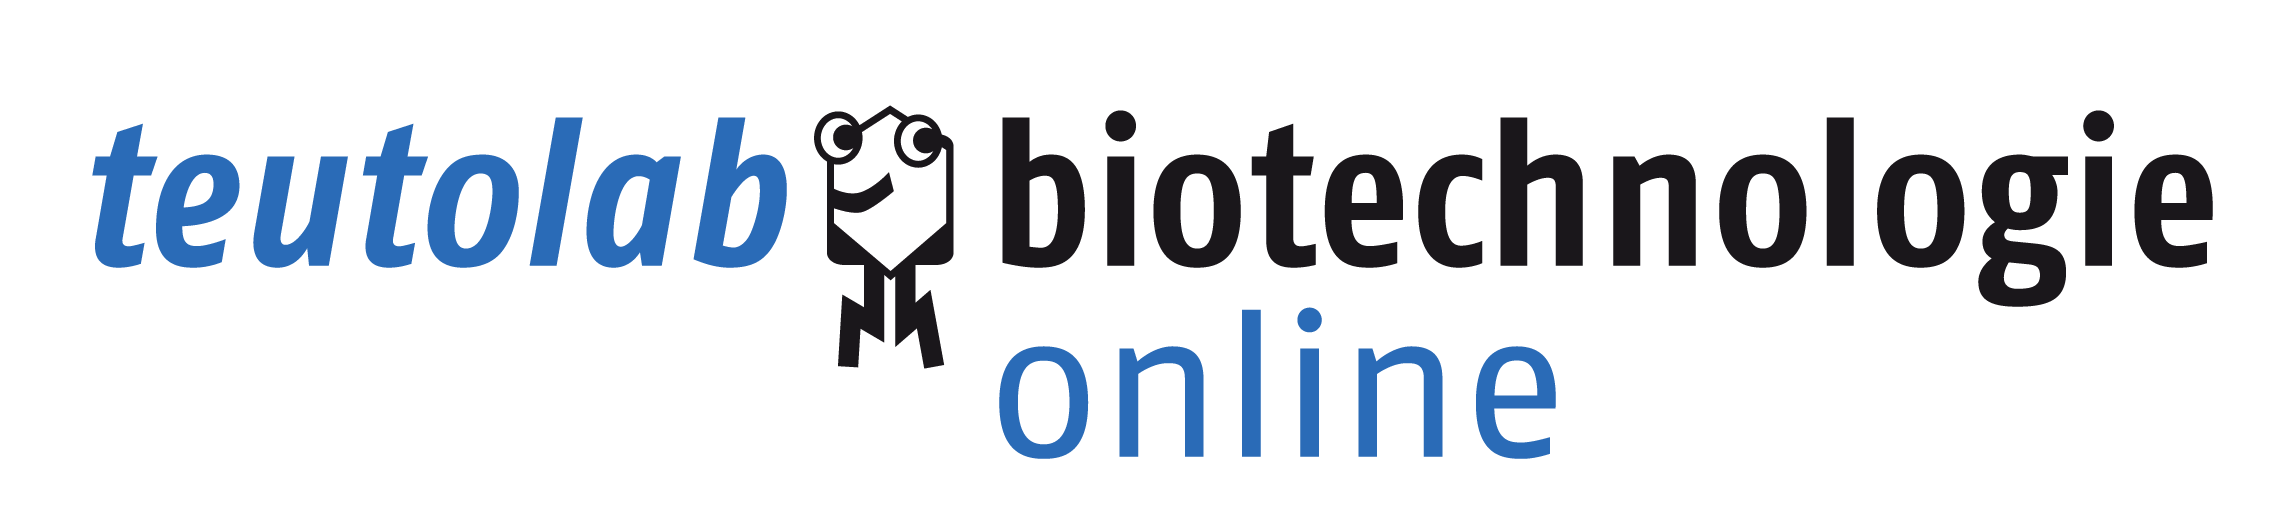 Online-Angebot des teutolab-biotechnologie